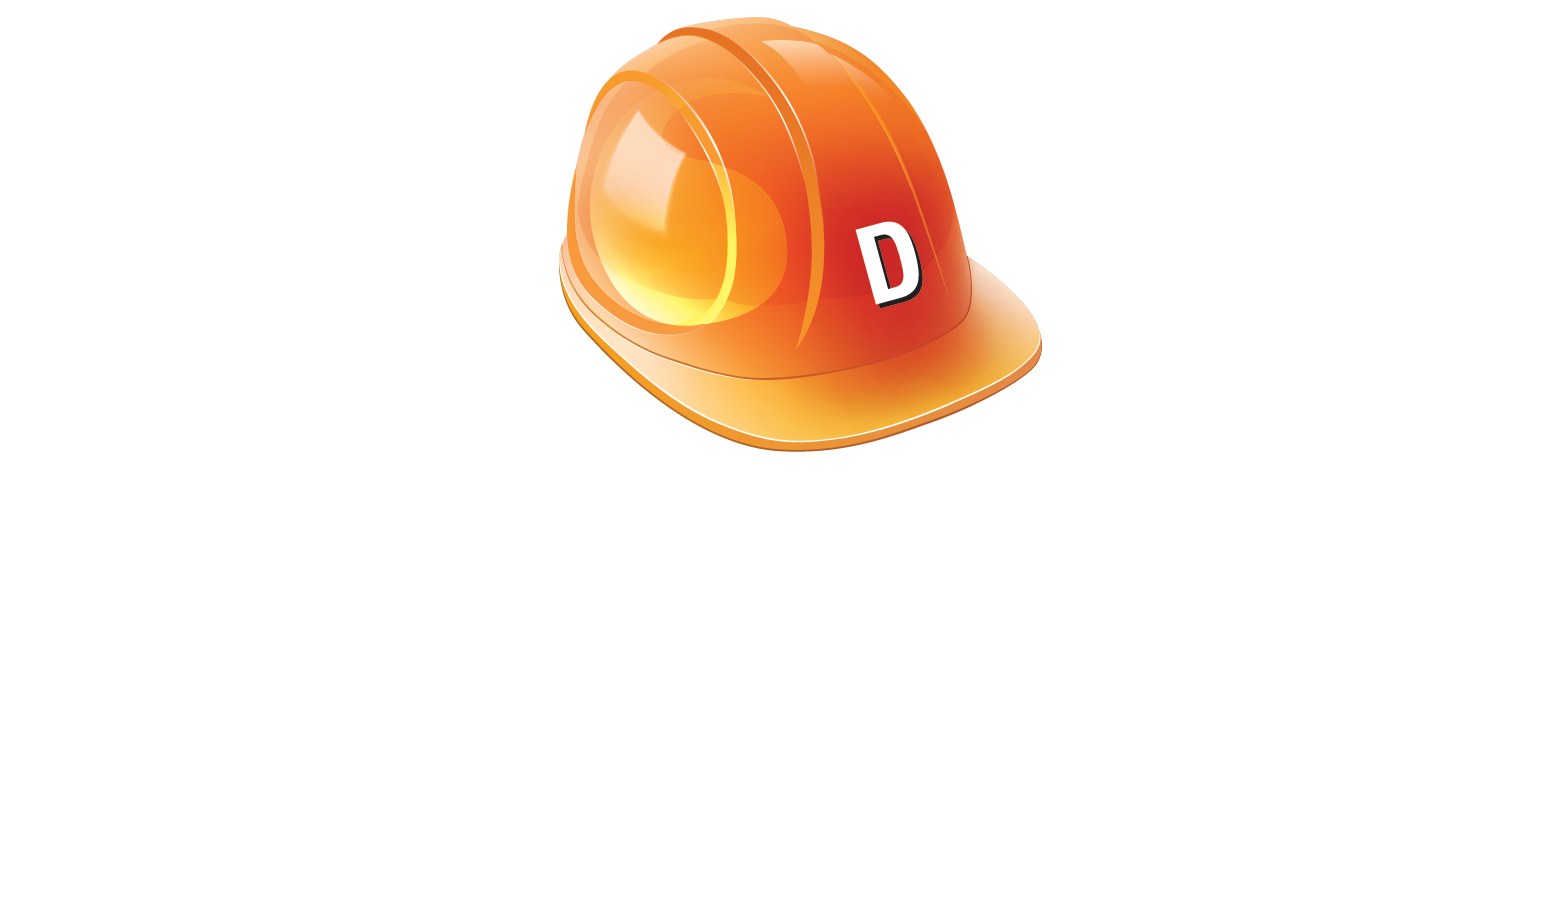 DAYCO Construction, Inc.